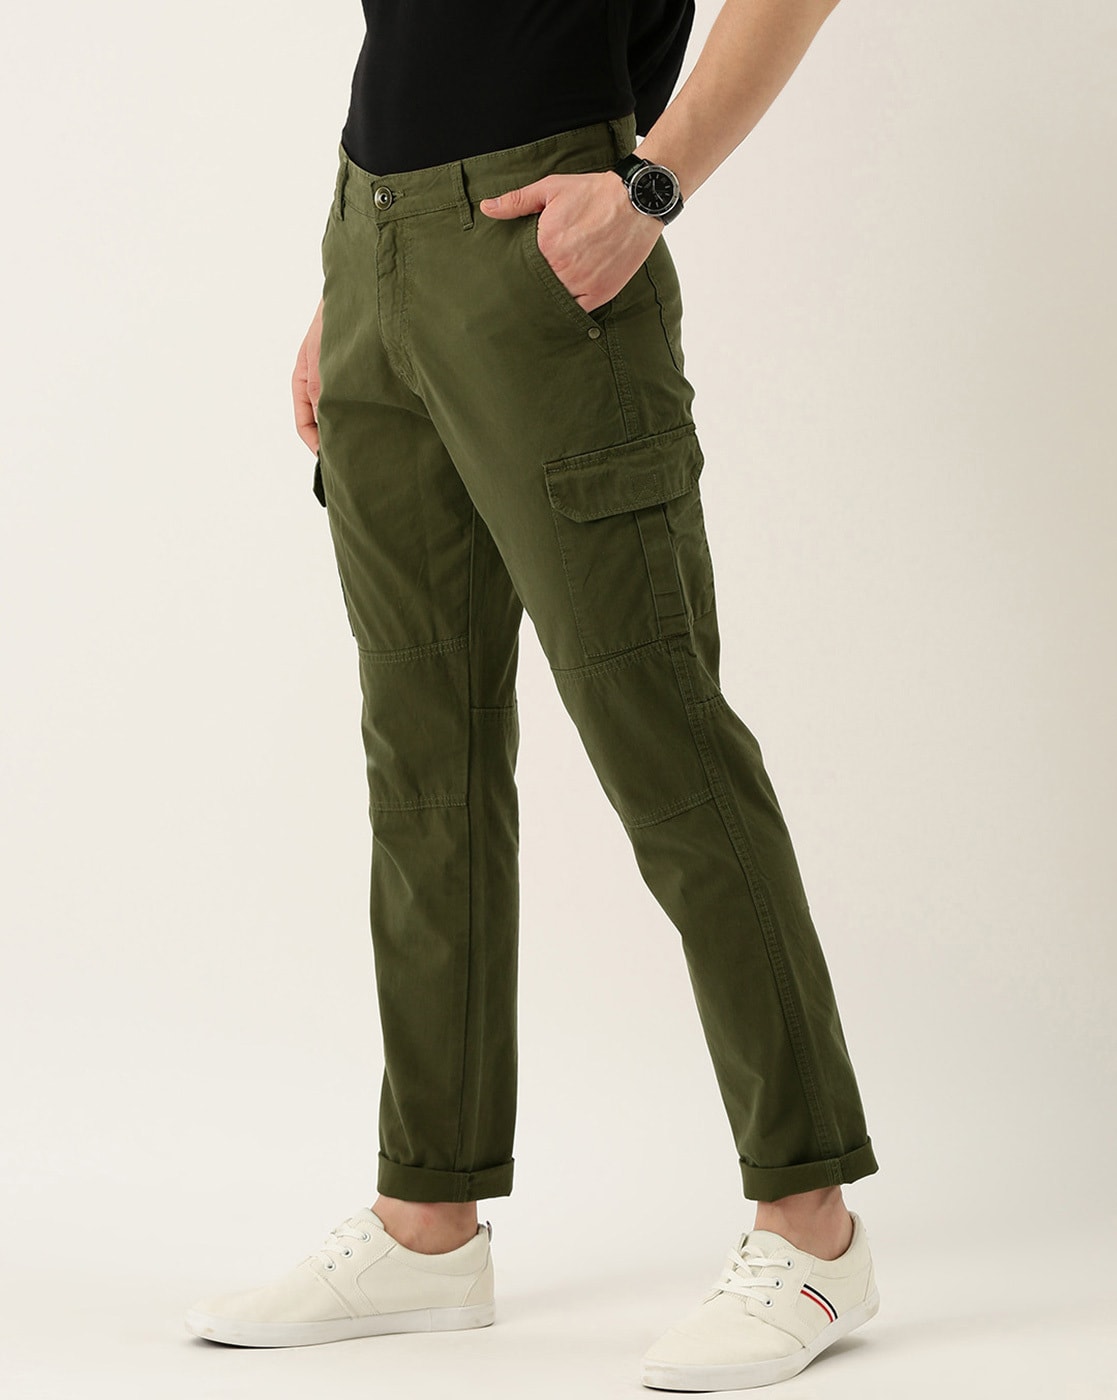 ASOS DESIGN baggy cargo pants in khaki and black color block and belt  detail in nylon | ASOS